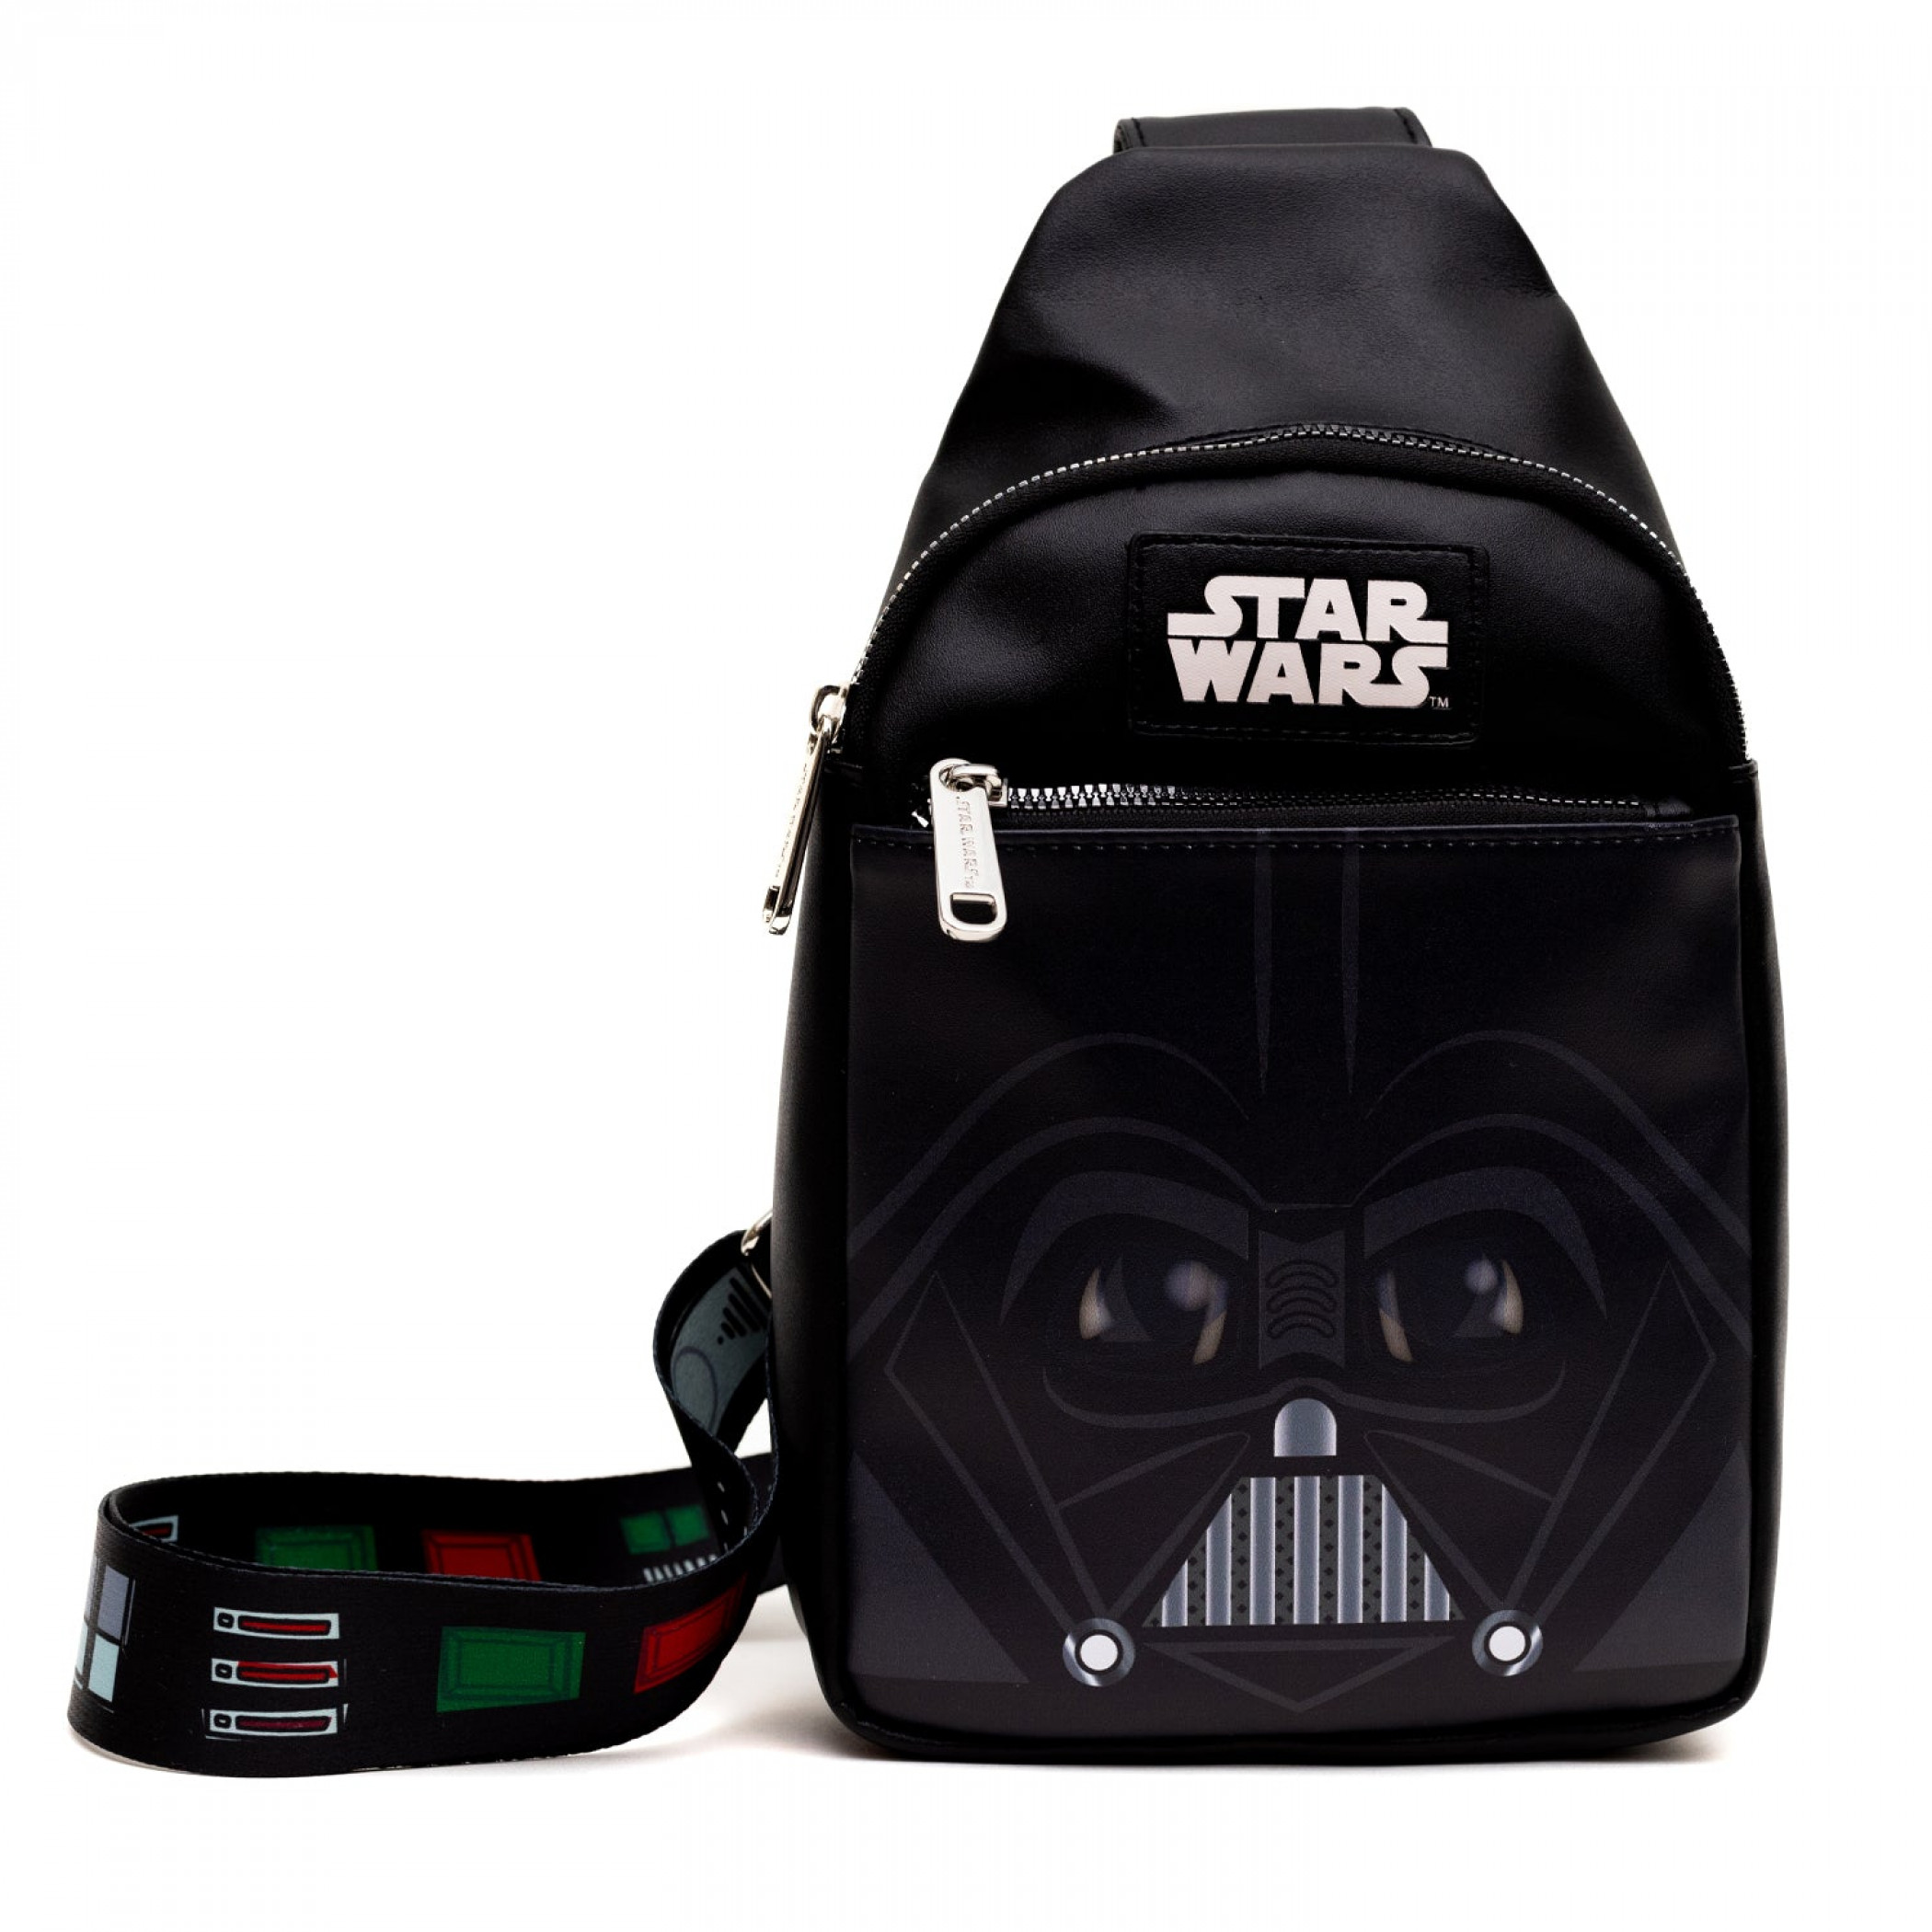 Star Wars Buckle-Down Crossbody Bag